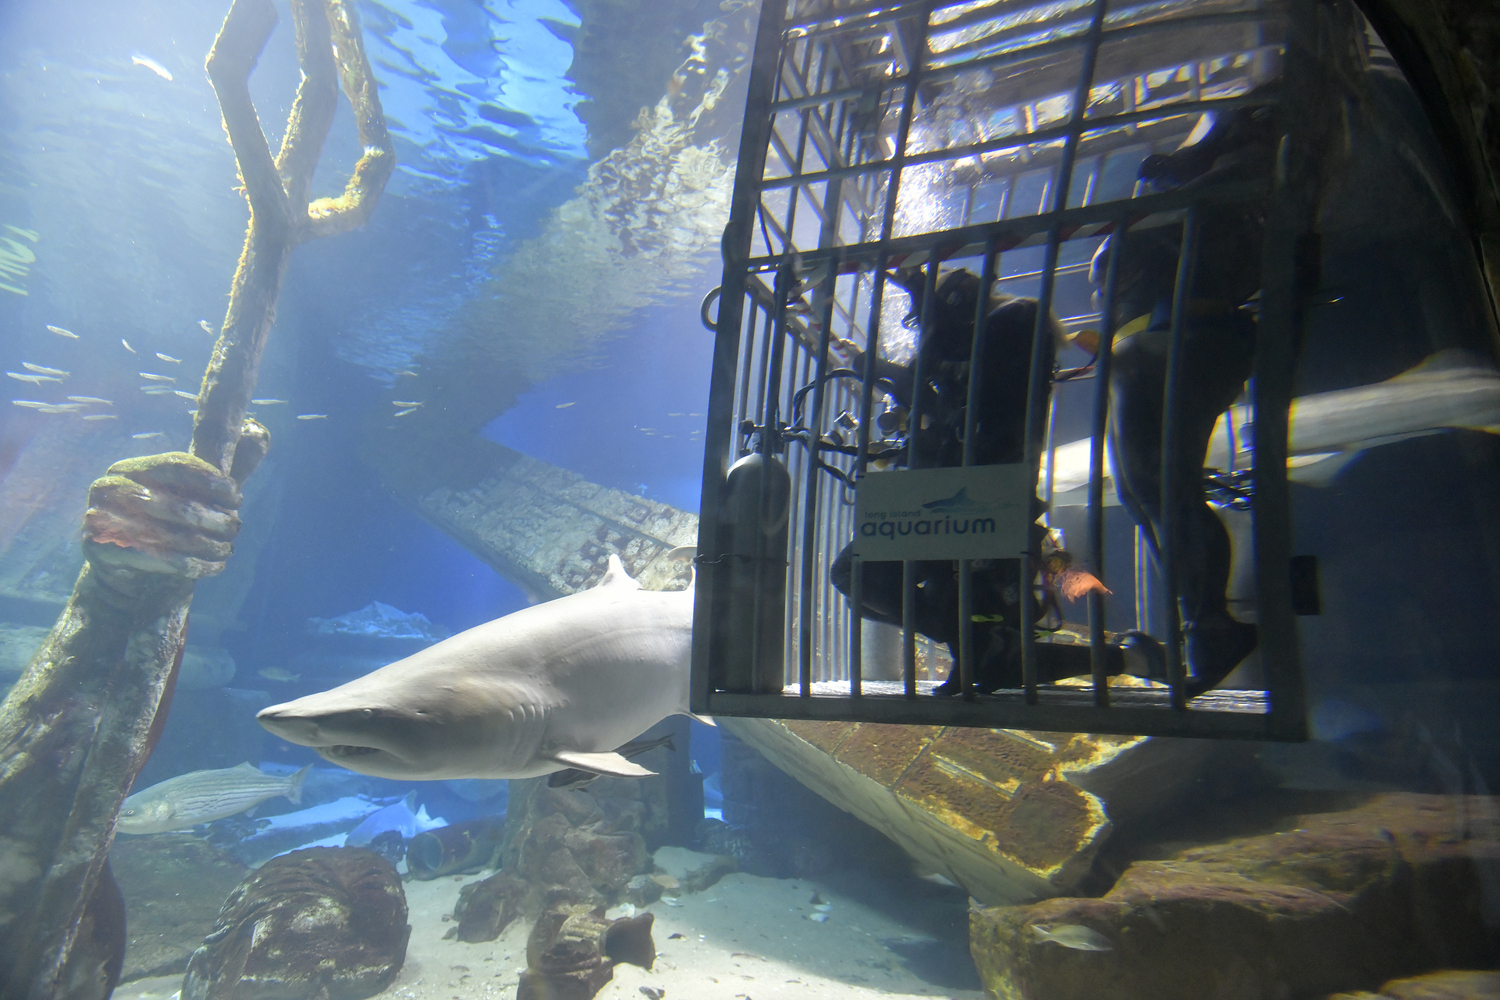 Desirée in the shark cage. DANA SHAW